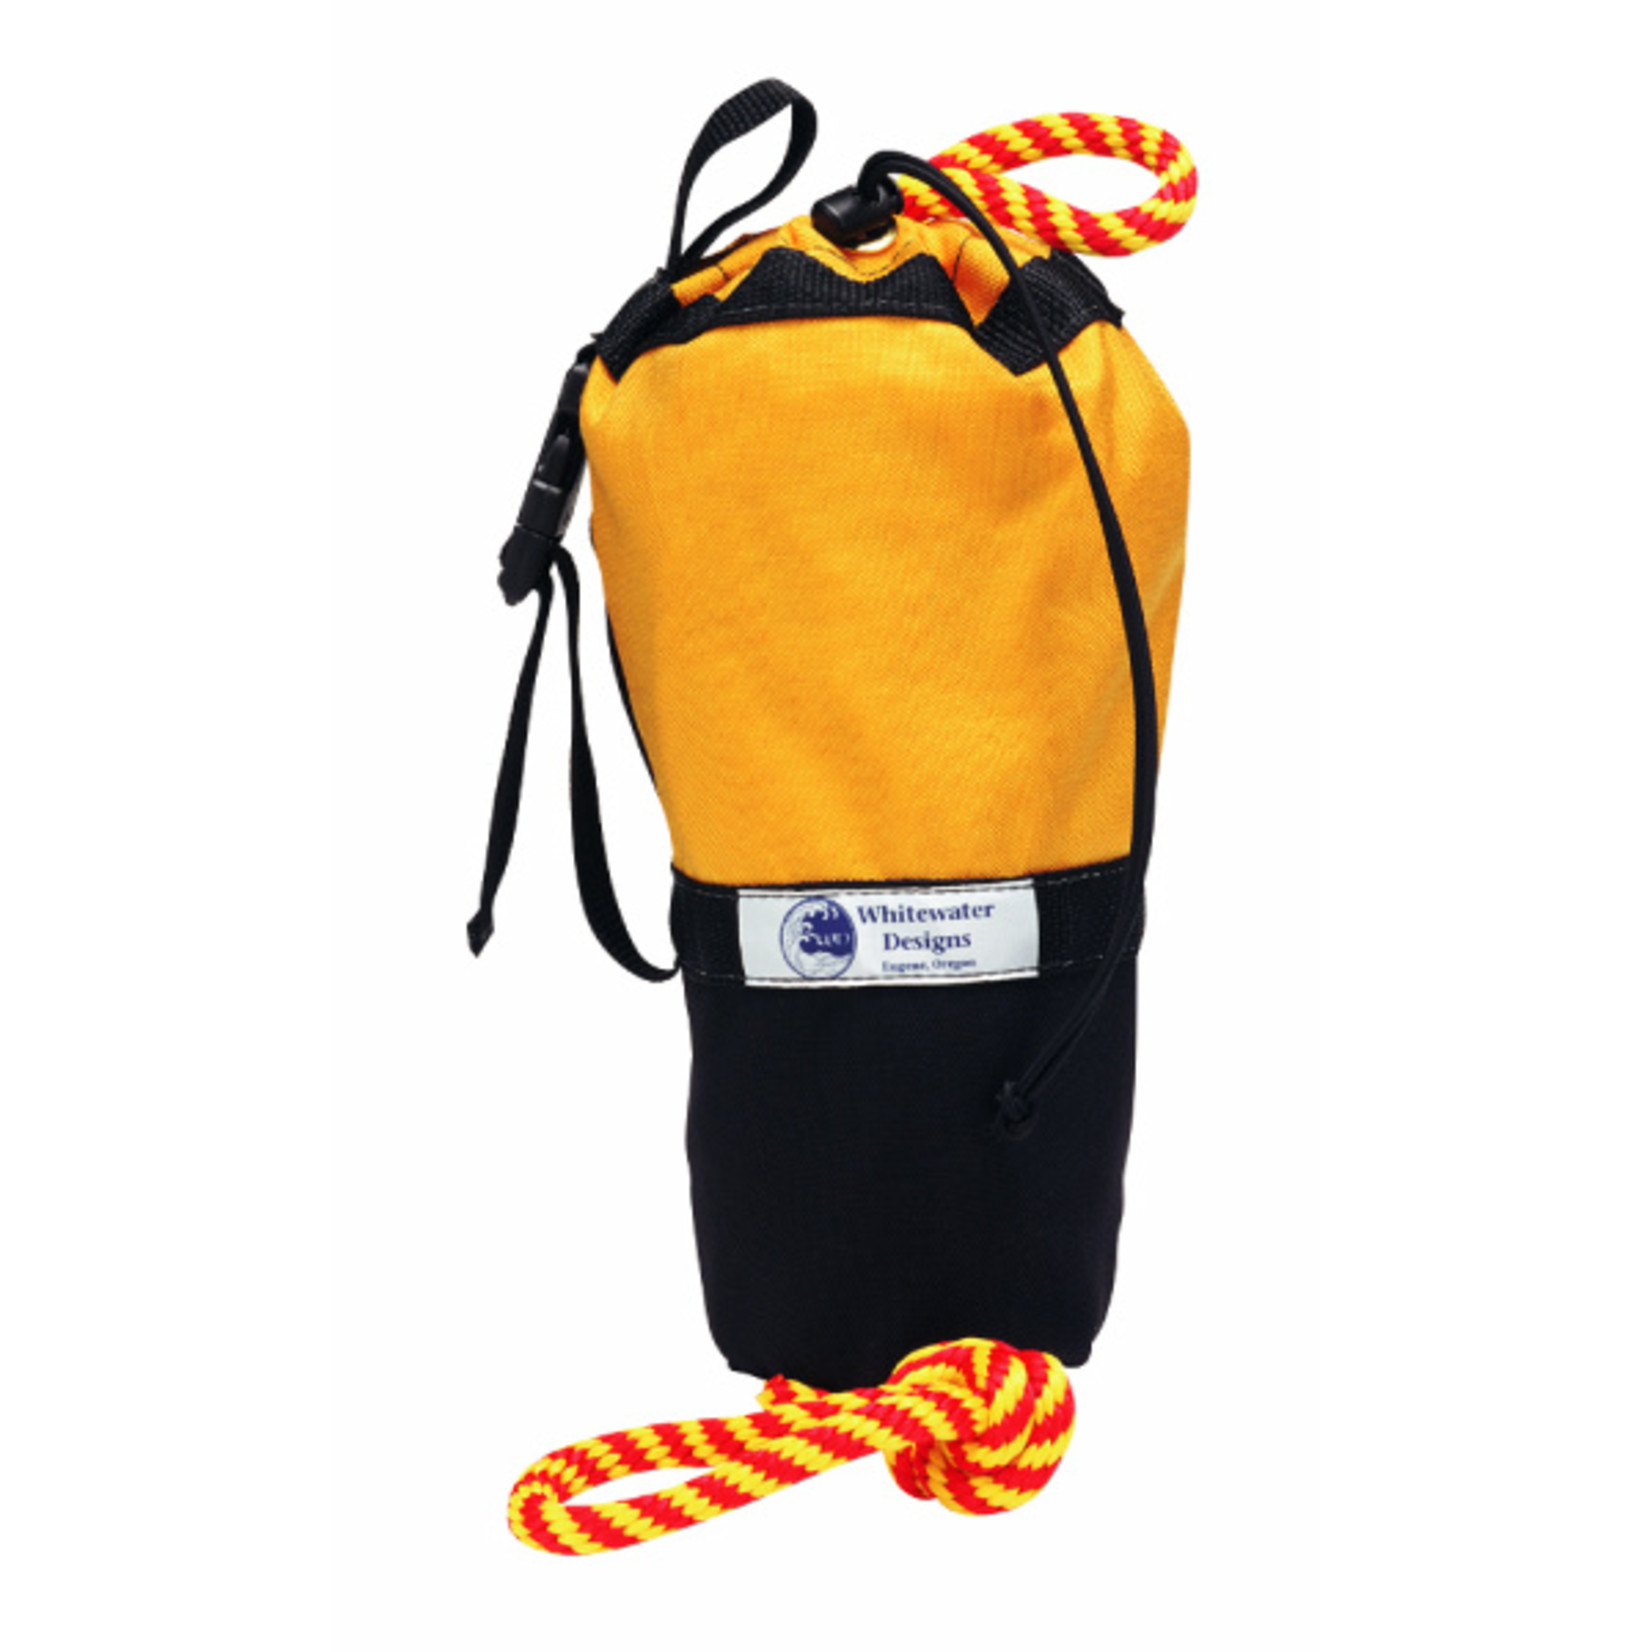 Whitewater Designs Reverse Taper Rescue Bag